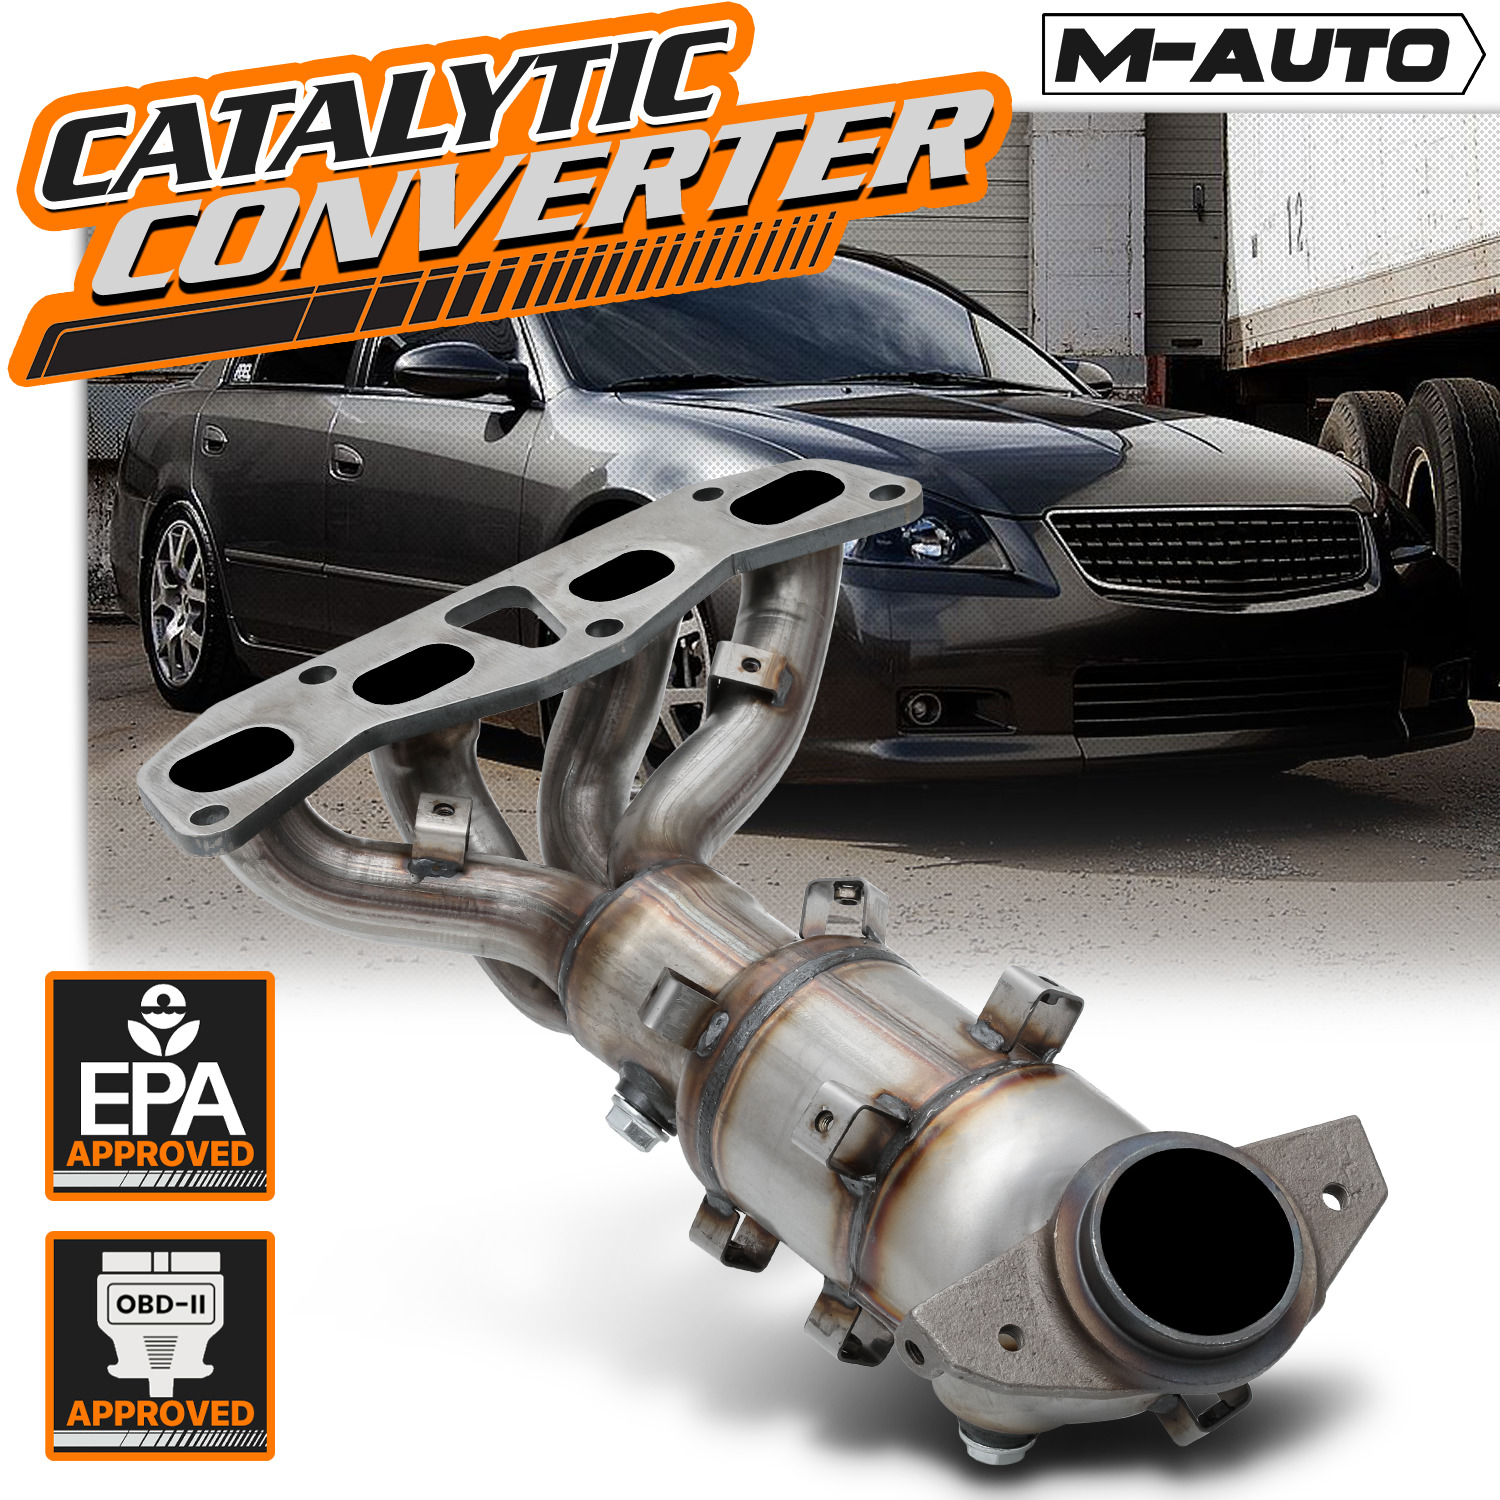 Catalytic Converter Exhaust Header Manifold For 2002-2006 Altima Sentra 2.5 I4